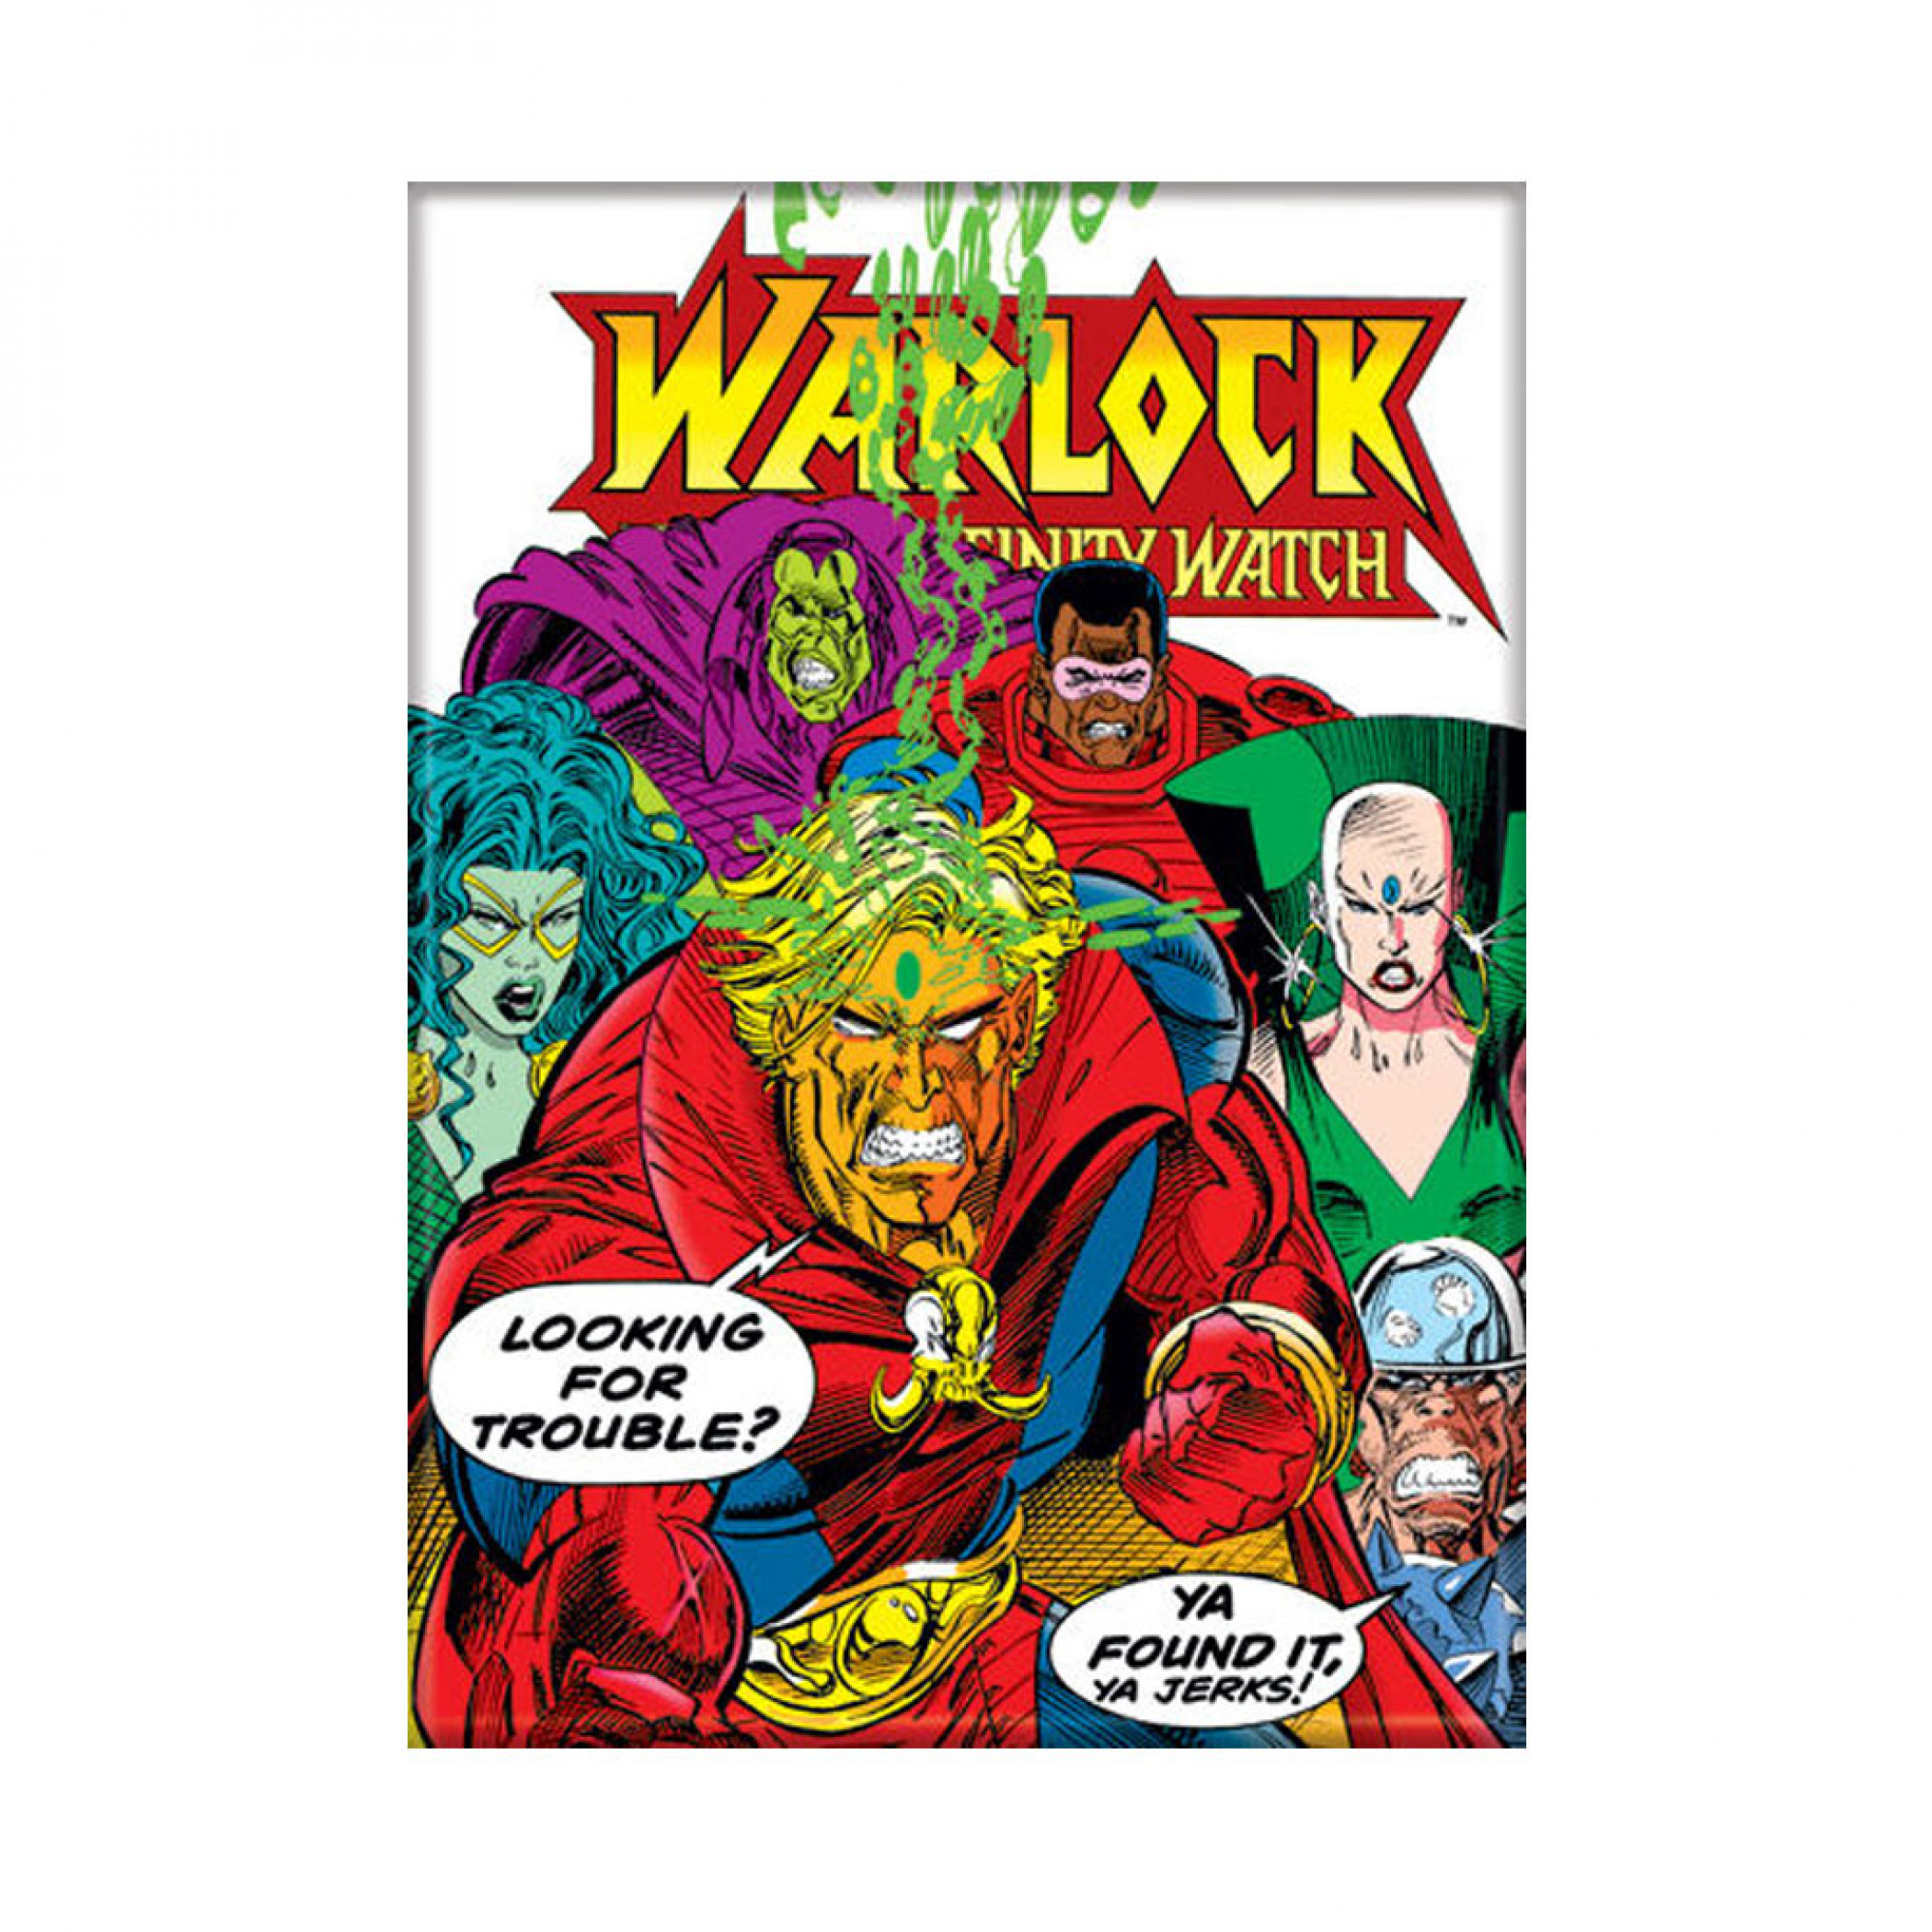 Warlock #27 Comic Cover Magnet